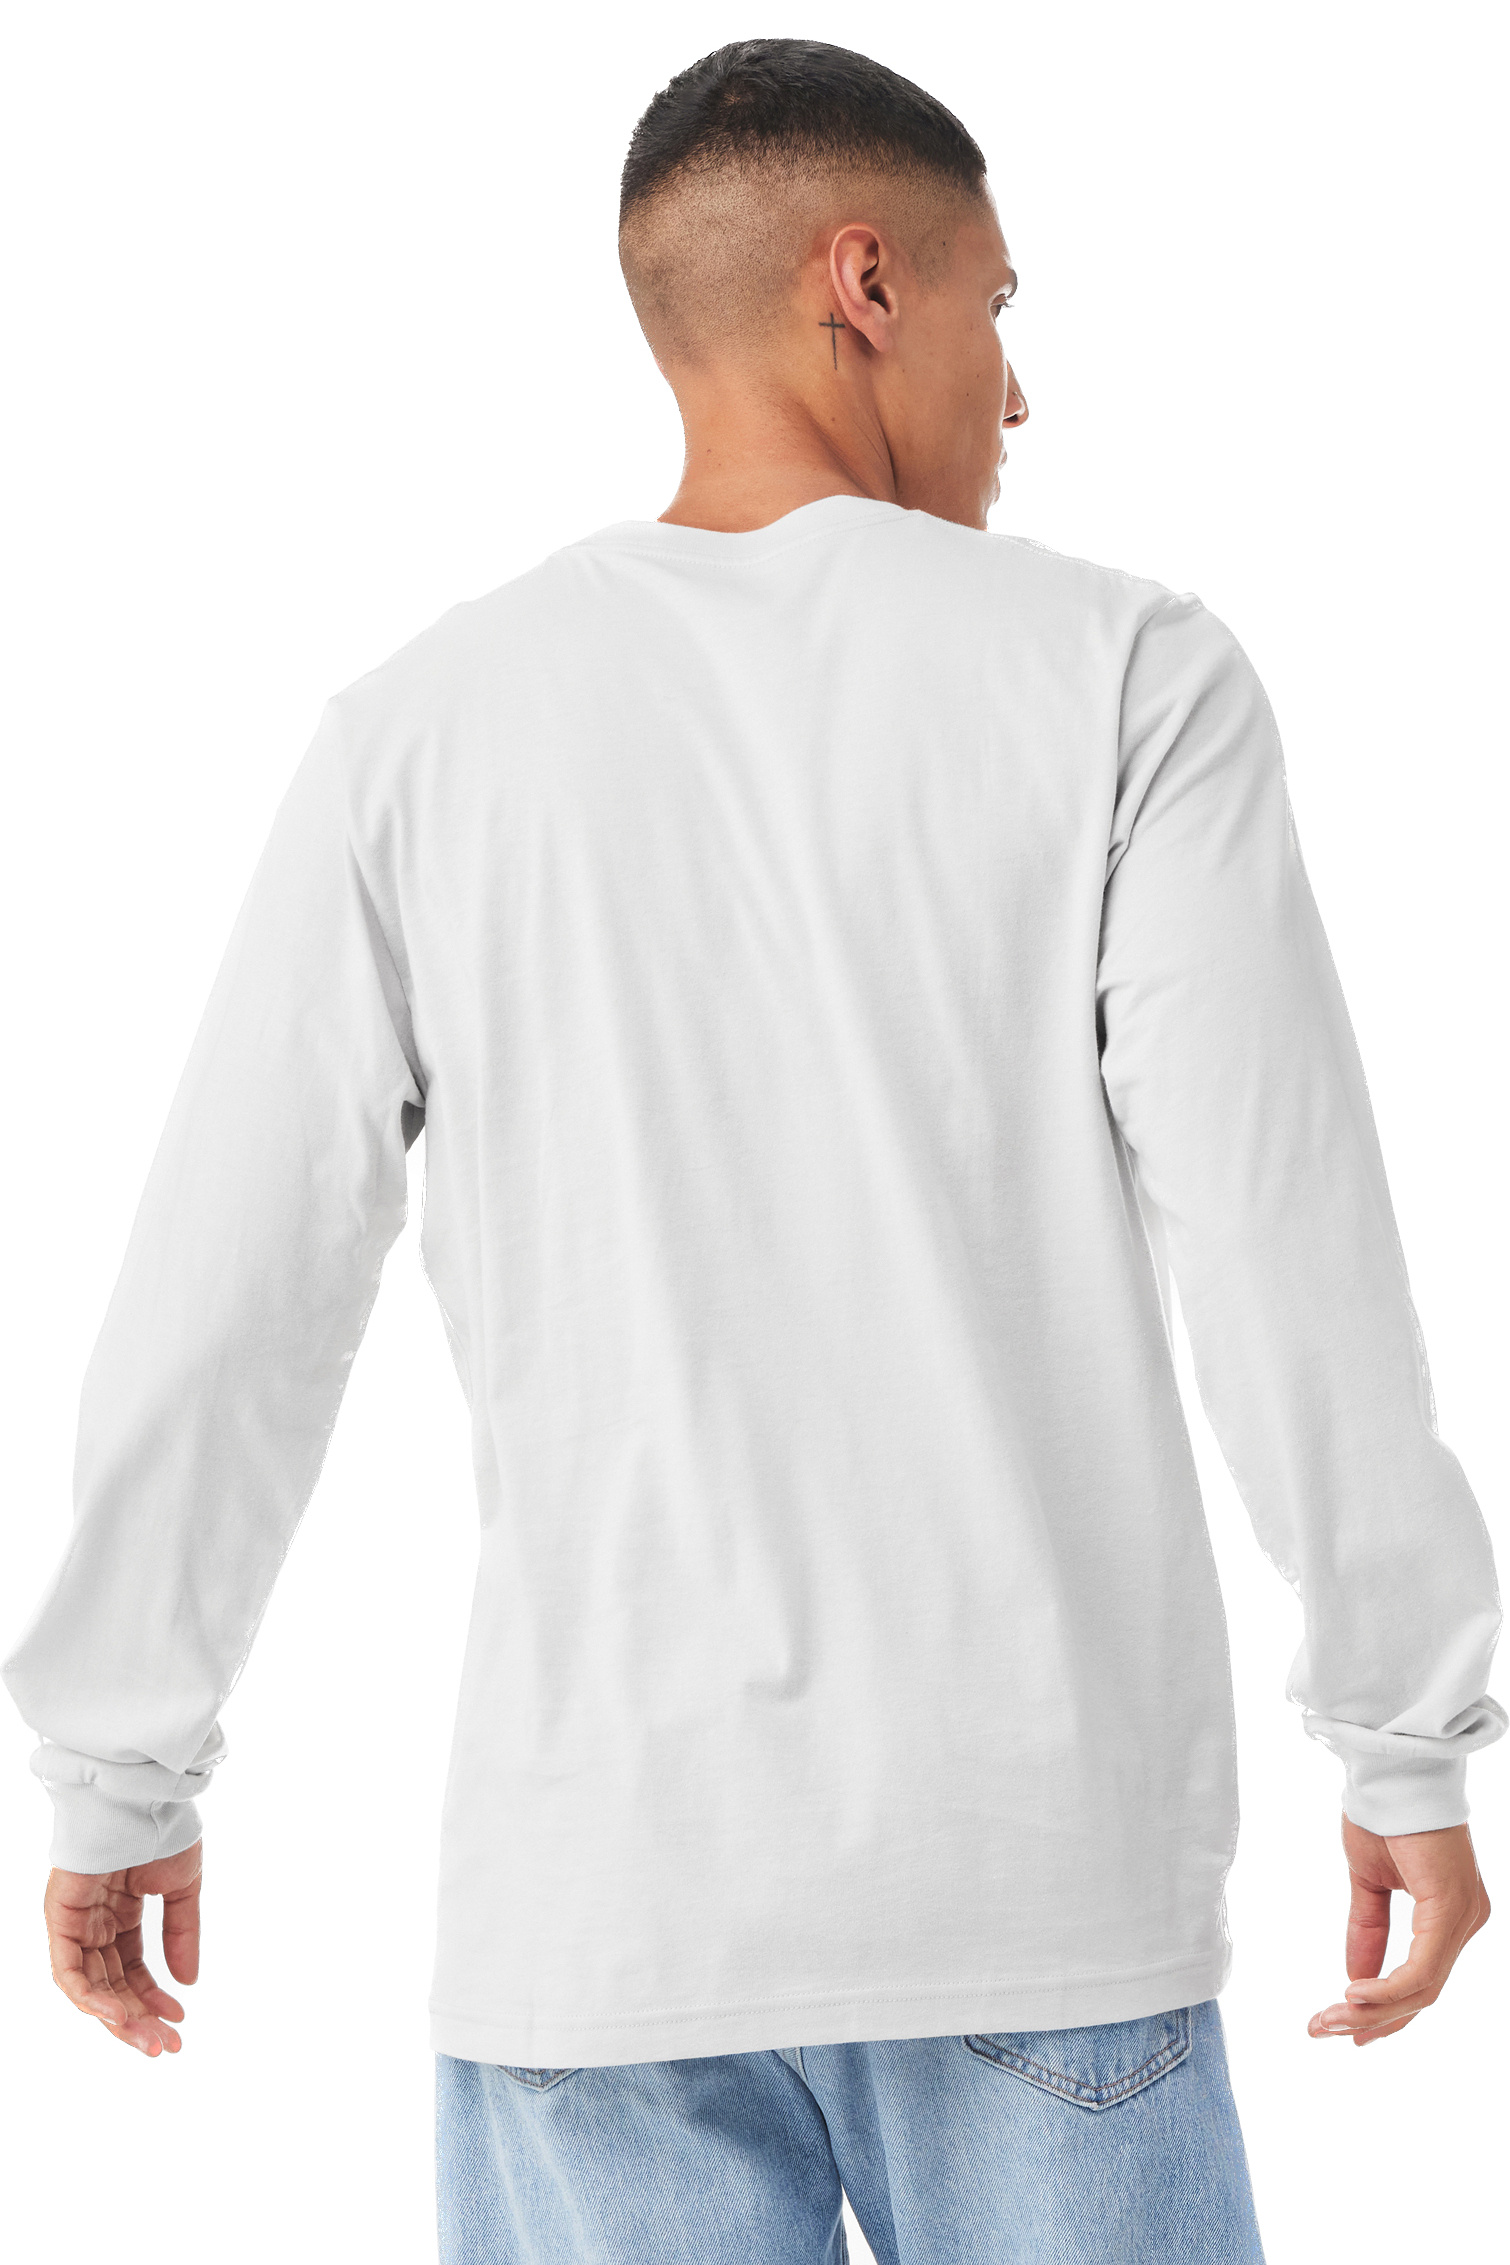 Bella Canvas 3501 Unisex Jersey Long Sleeve T Shirt | Jiffy Shirts